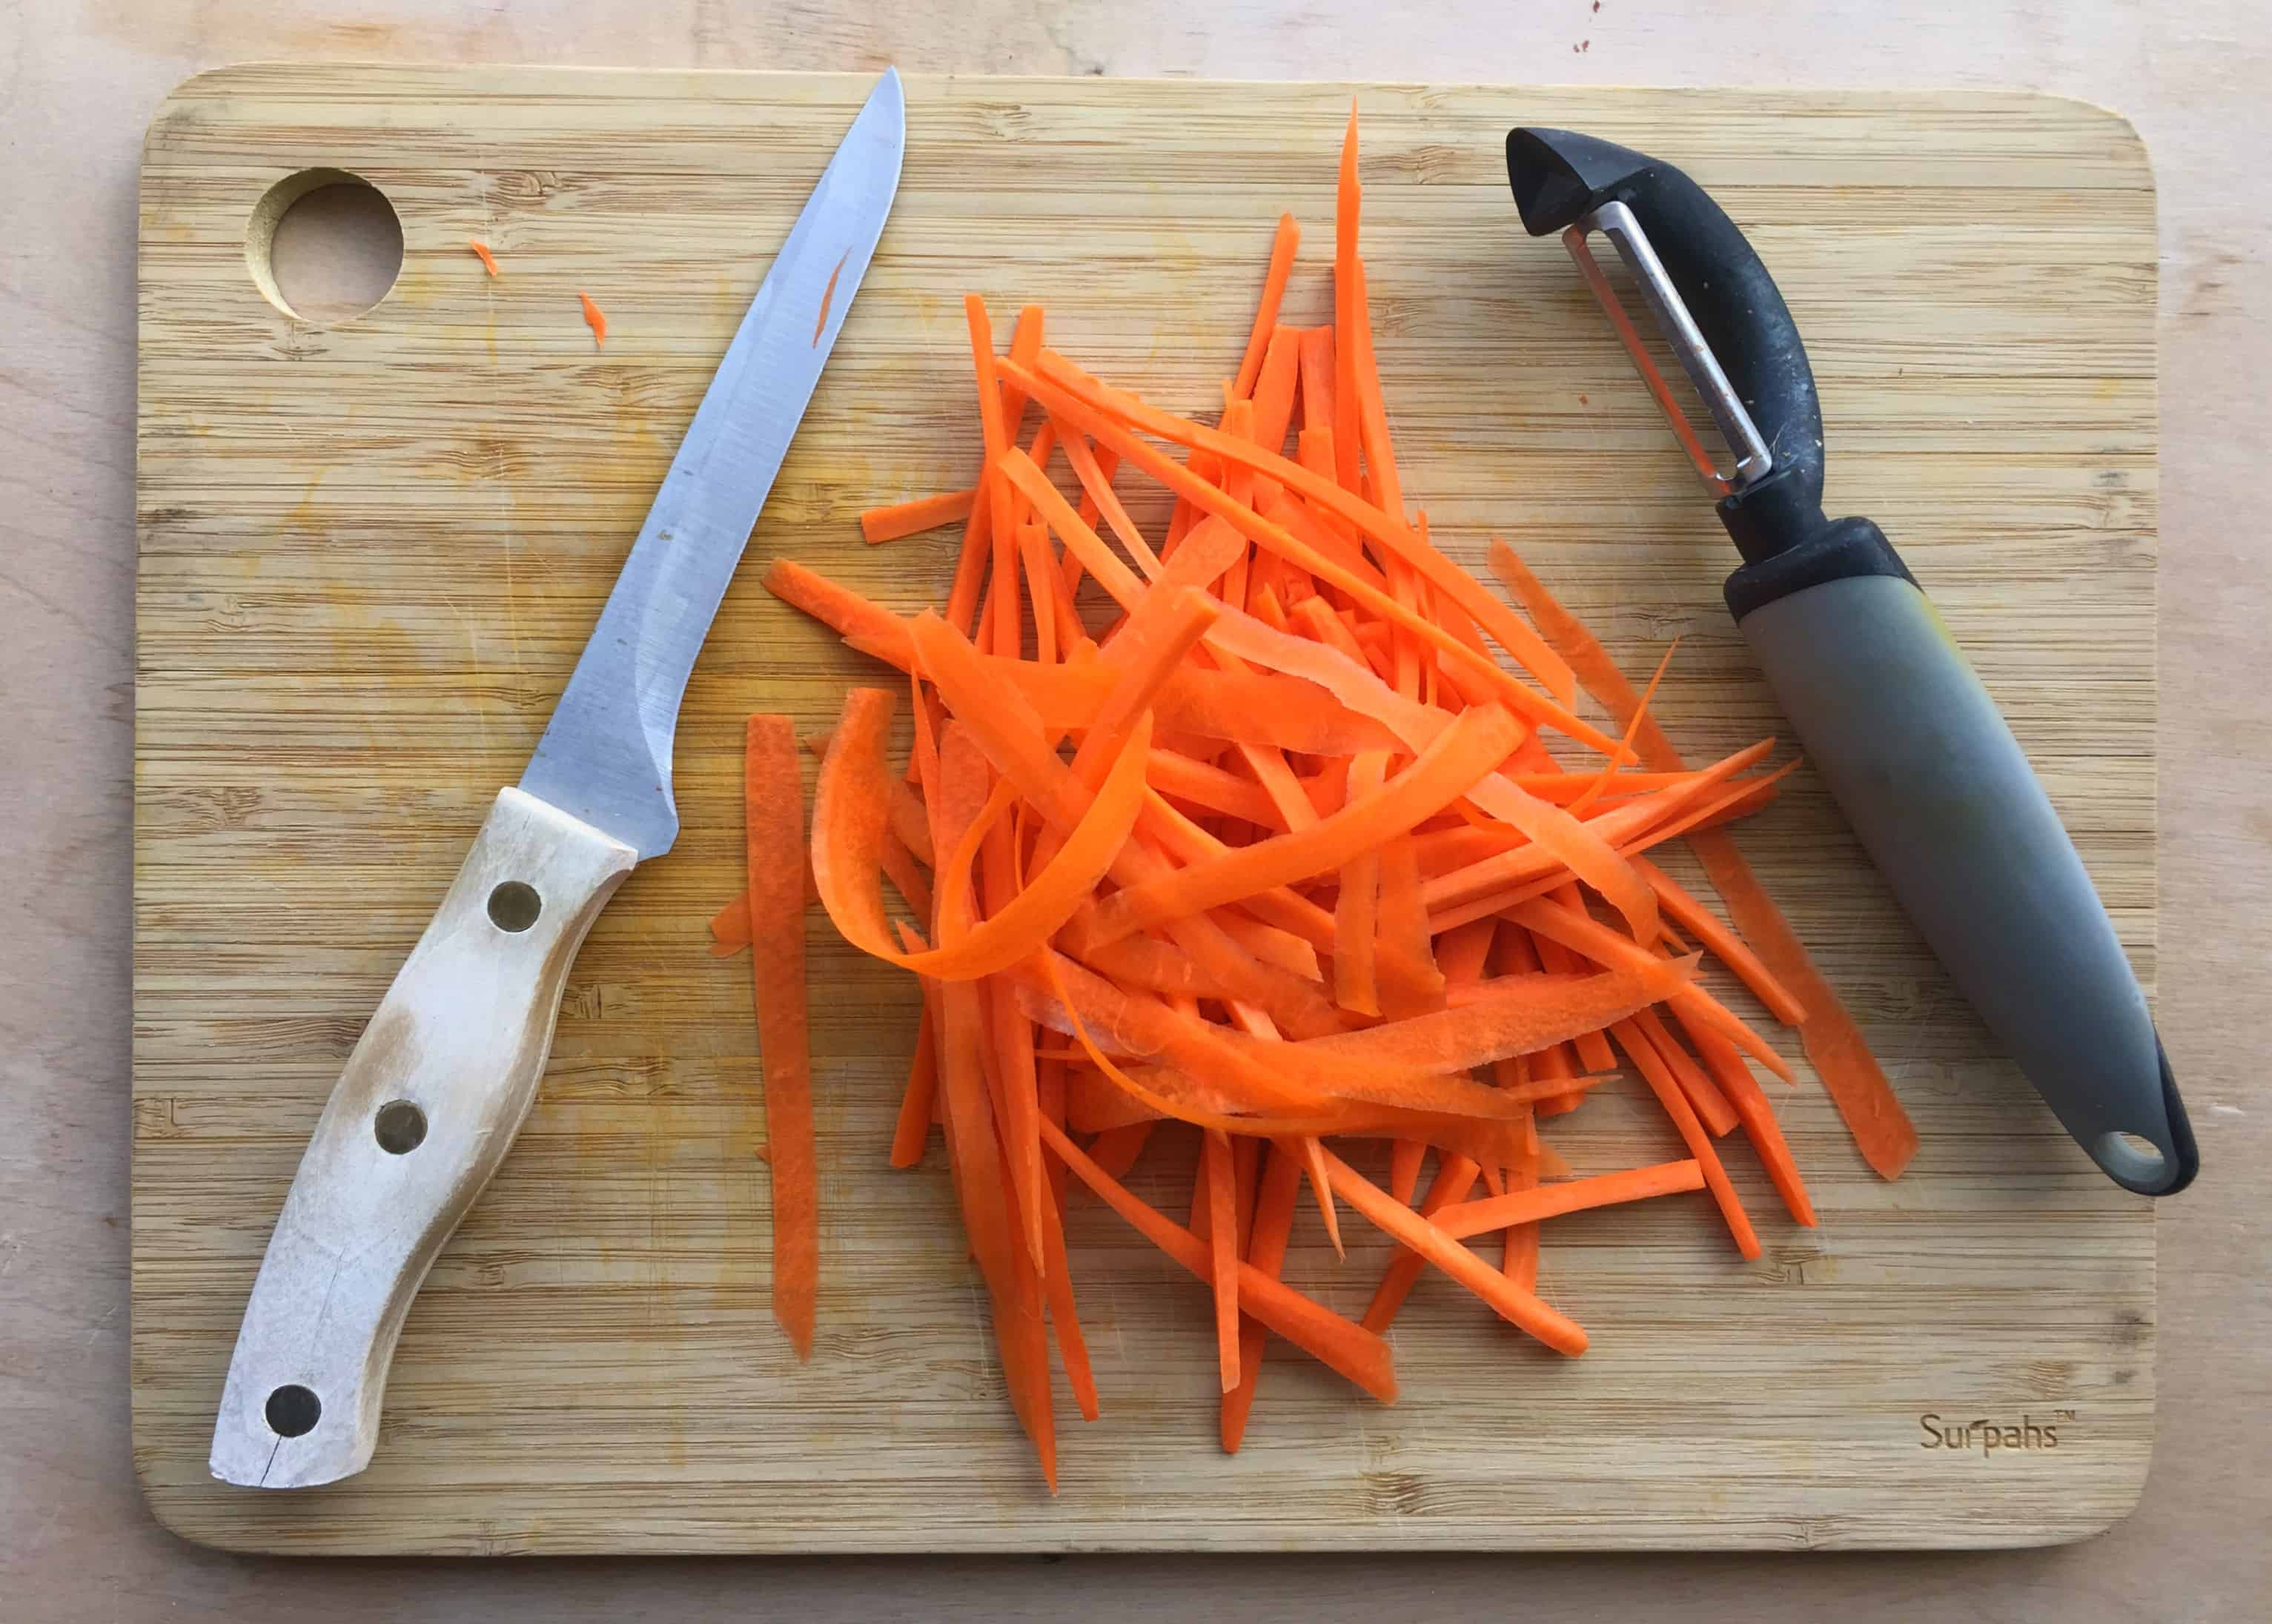 https://deliciousmadeeasy.com/wp-content/uploads/2015/03/moroccan-carrot-salad.jpg